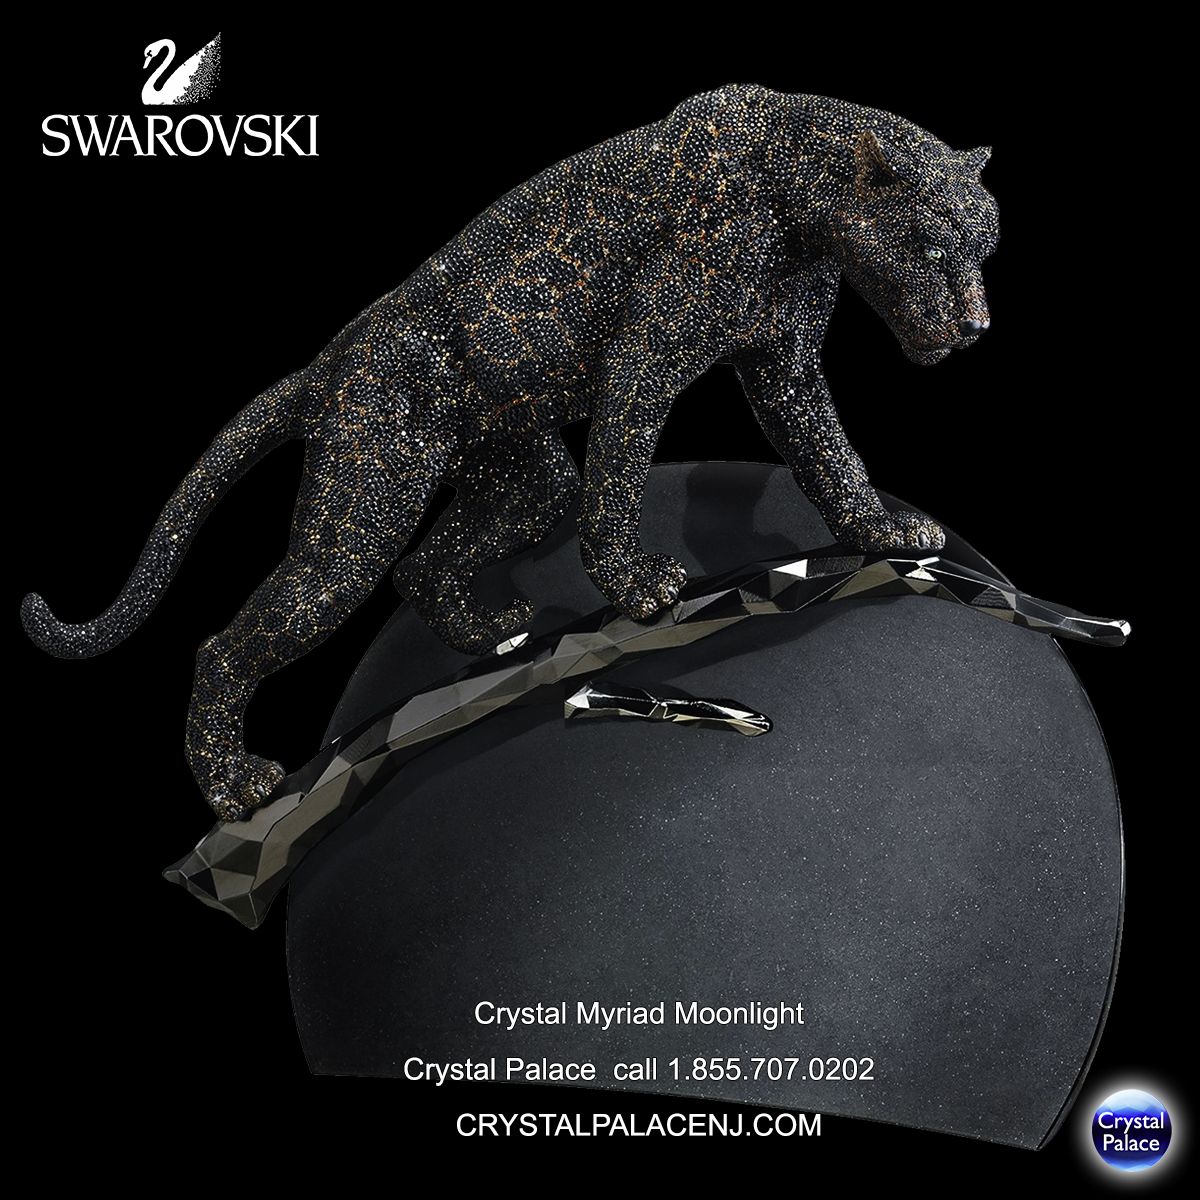 Swarovski Crystal Myriad Moonlight The Black Jaguar 2014